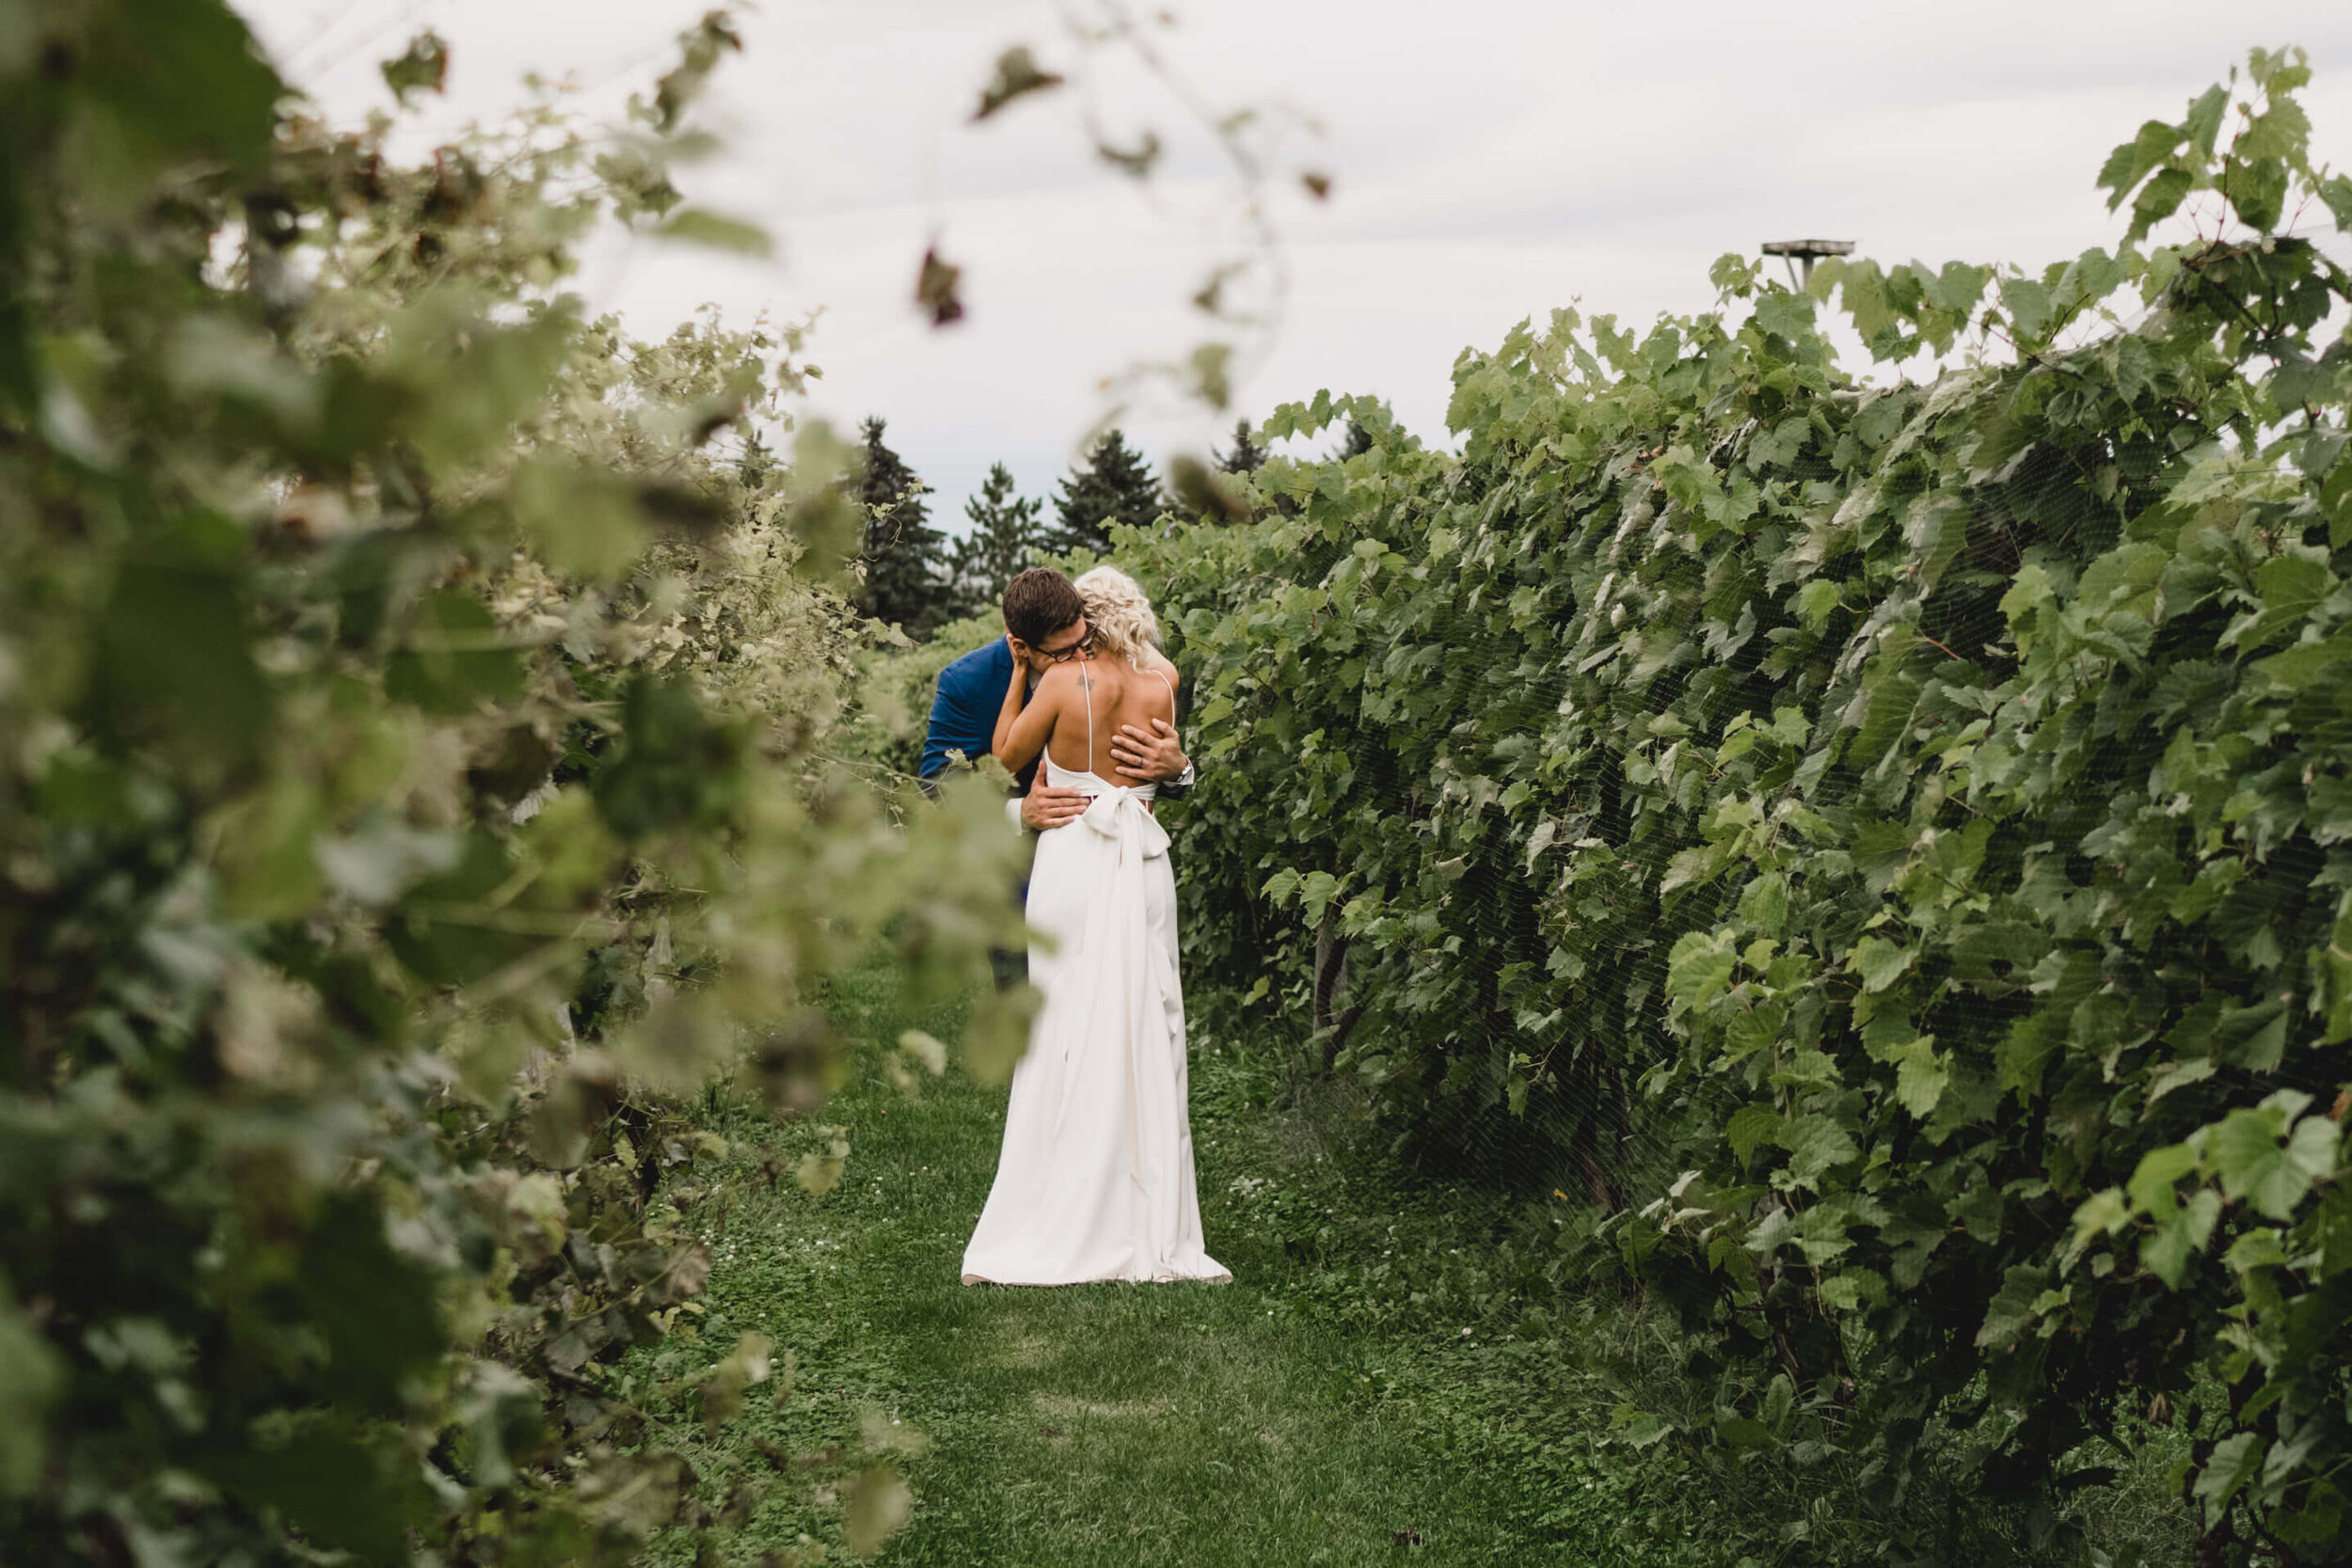 engle-olson-wedding-winery-bride-groom-12.jpg